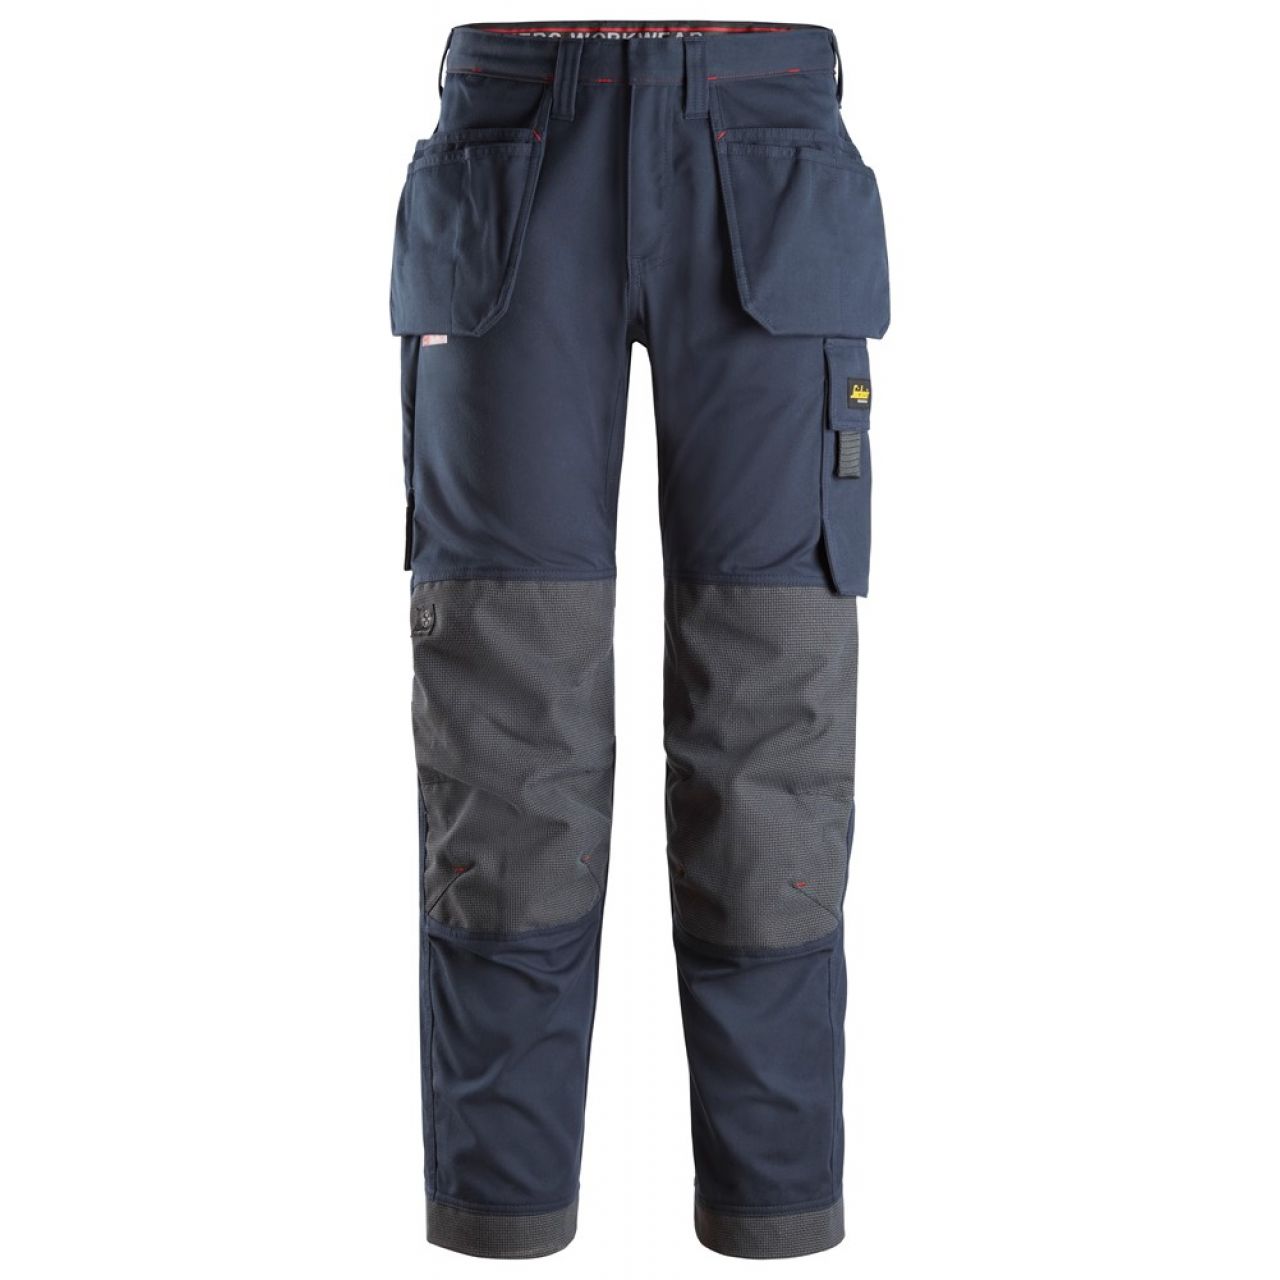 6286 Pantalones largos de trabajo con bolsillos flotantes ProtecWork azul marino talla 154